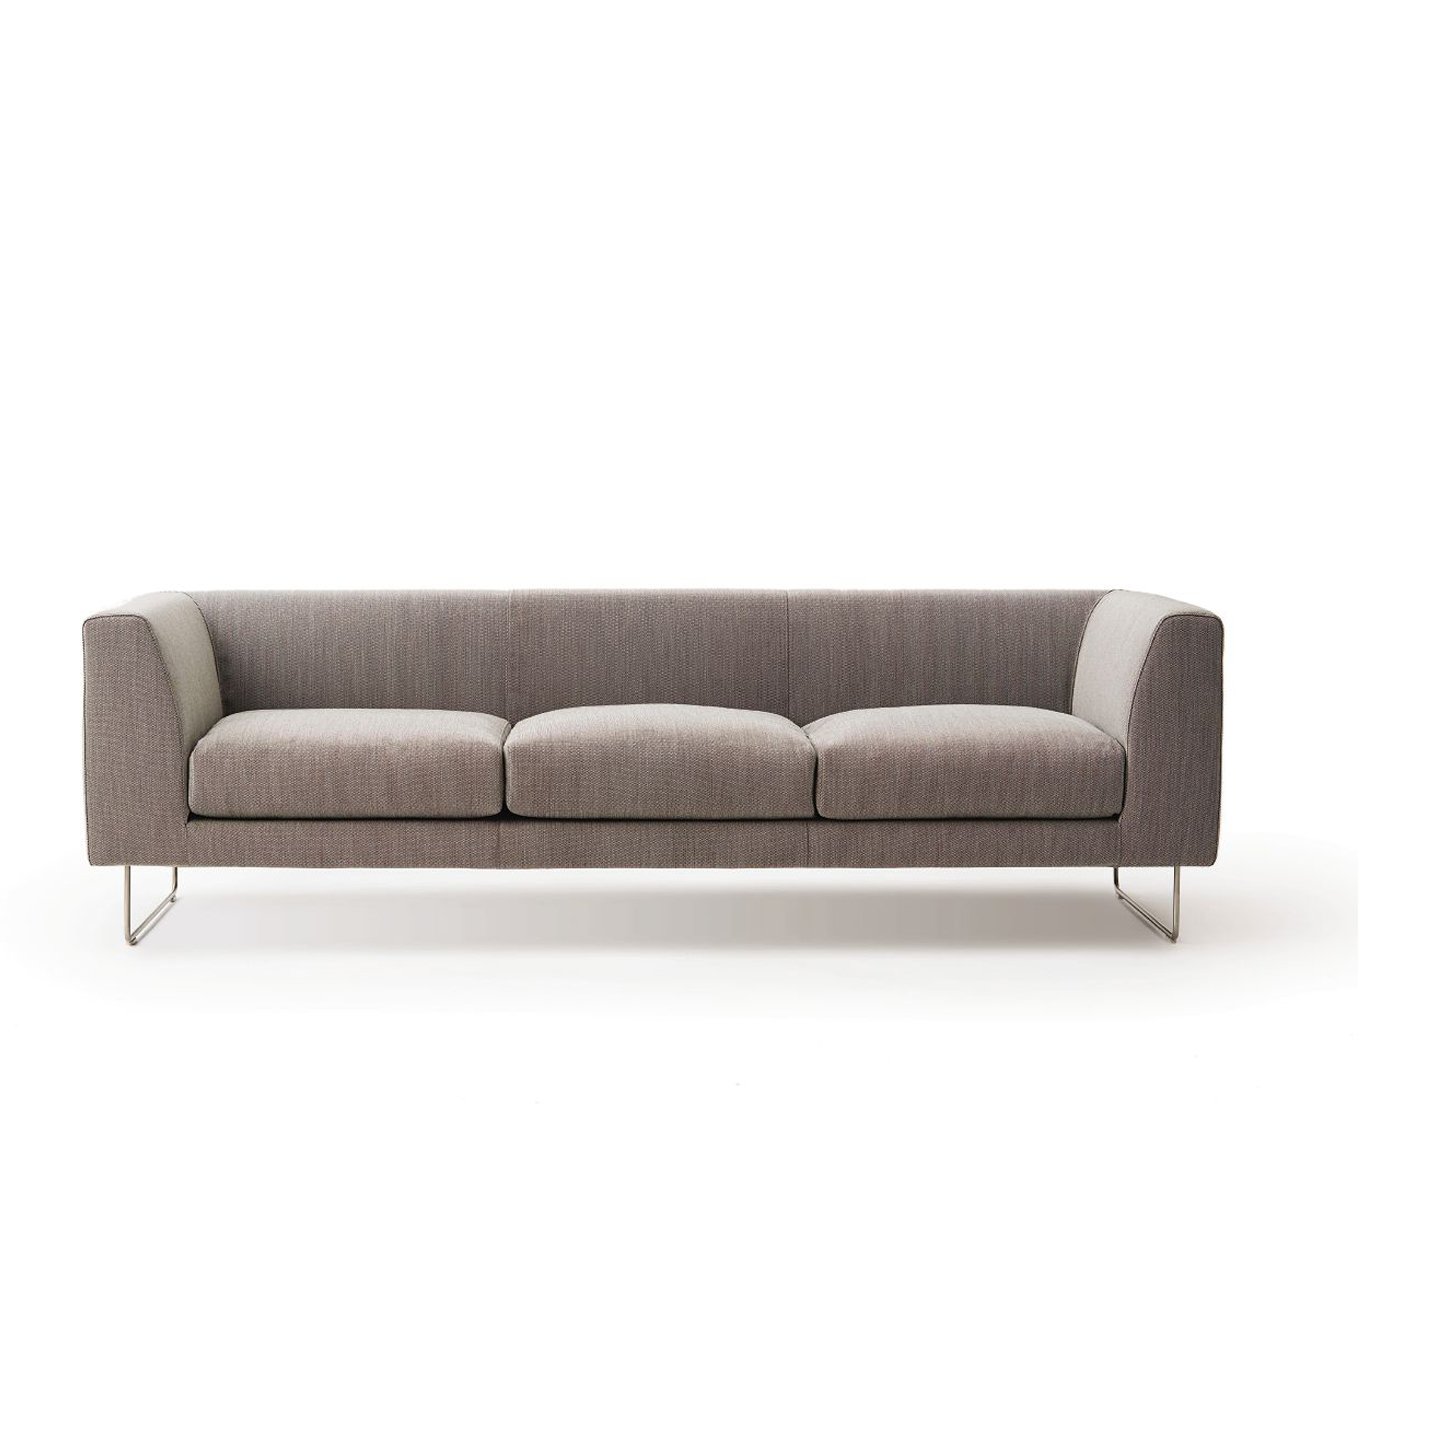 Haworth Elan three seater sofa in grey upholstery 